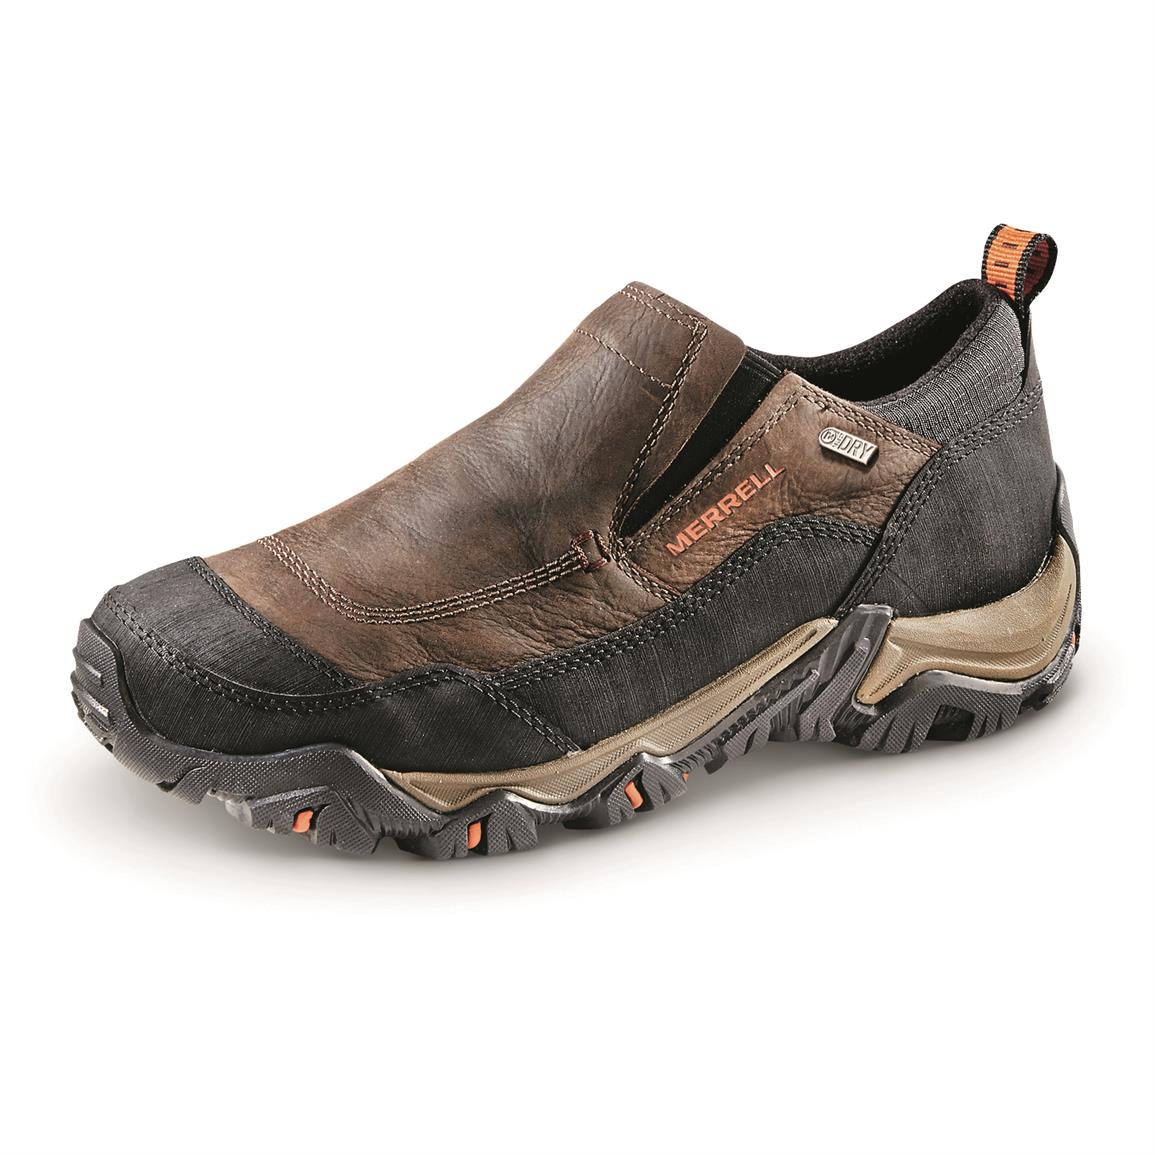 Merrell Men's Polarand Rove Waterproof Moc Toe Slip-On Shoes - 640111 ...